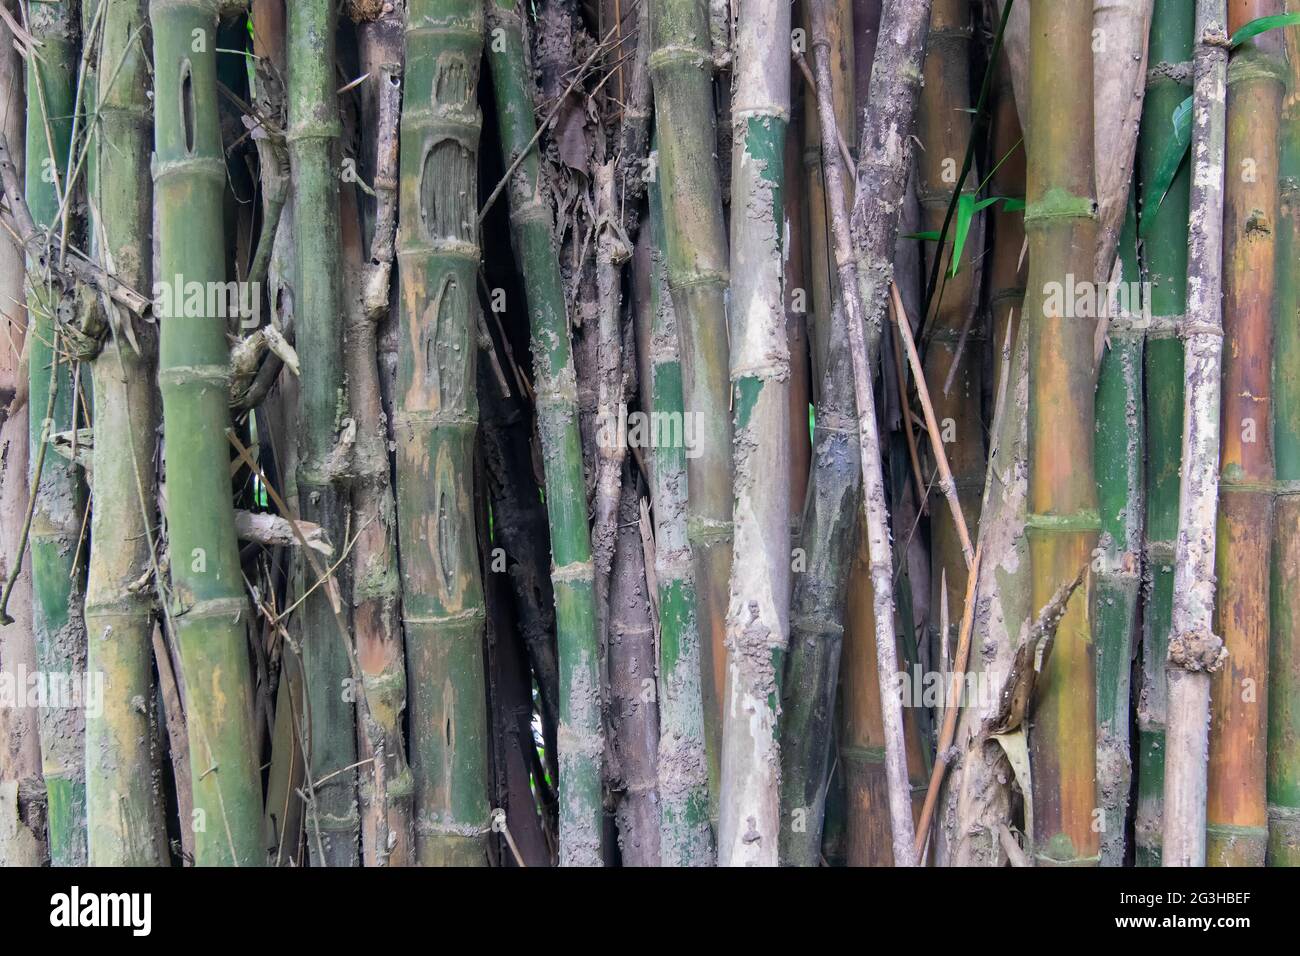 Bamboo trees and leaves, nature stock image - shot at Acharya Jagadish Chandra Bose Indian Botanic Garden previously known as Indian Botanic Garden Stock Photo